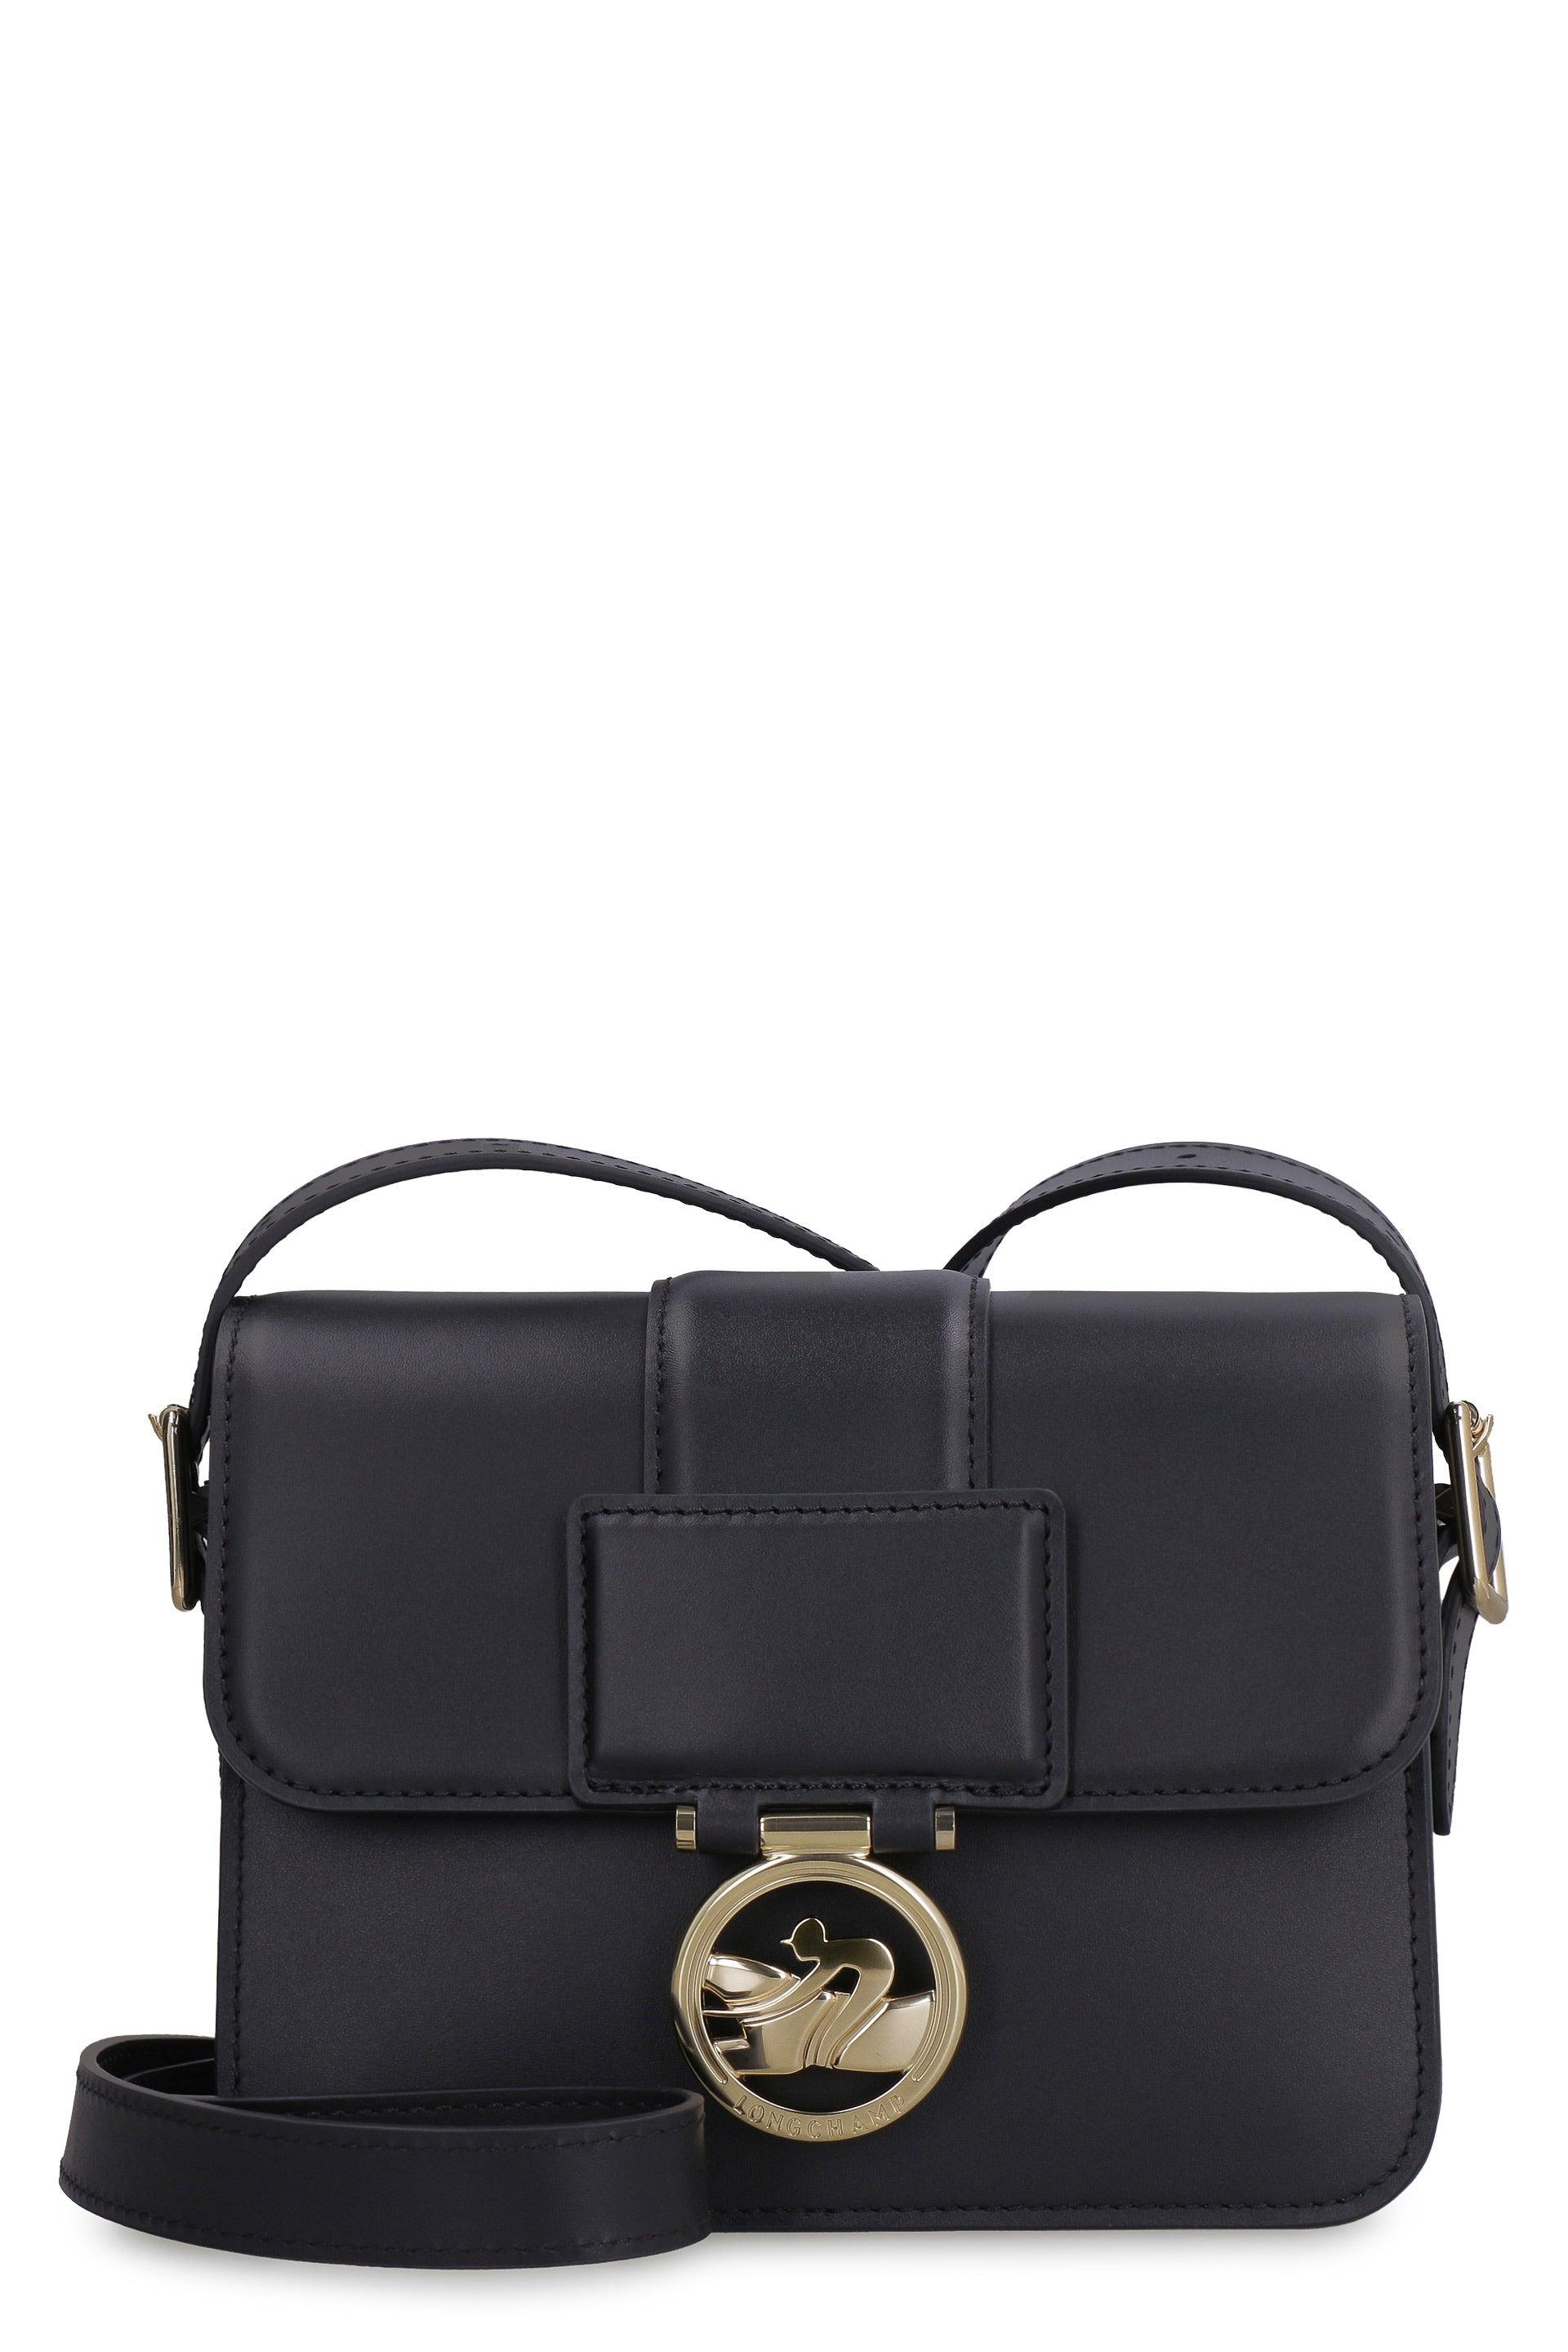 Longchamp Box-trot Leather Crossbody Bag in Black | Lyst